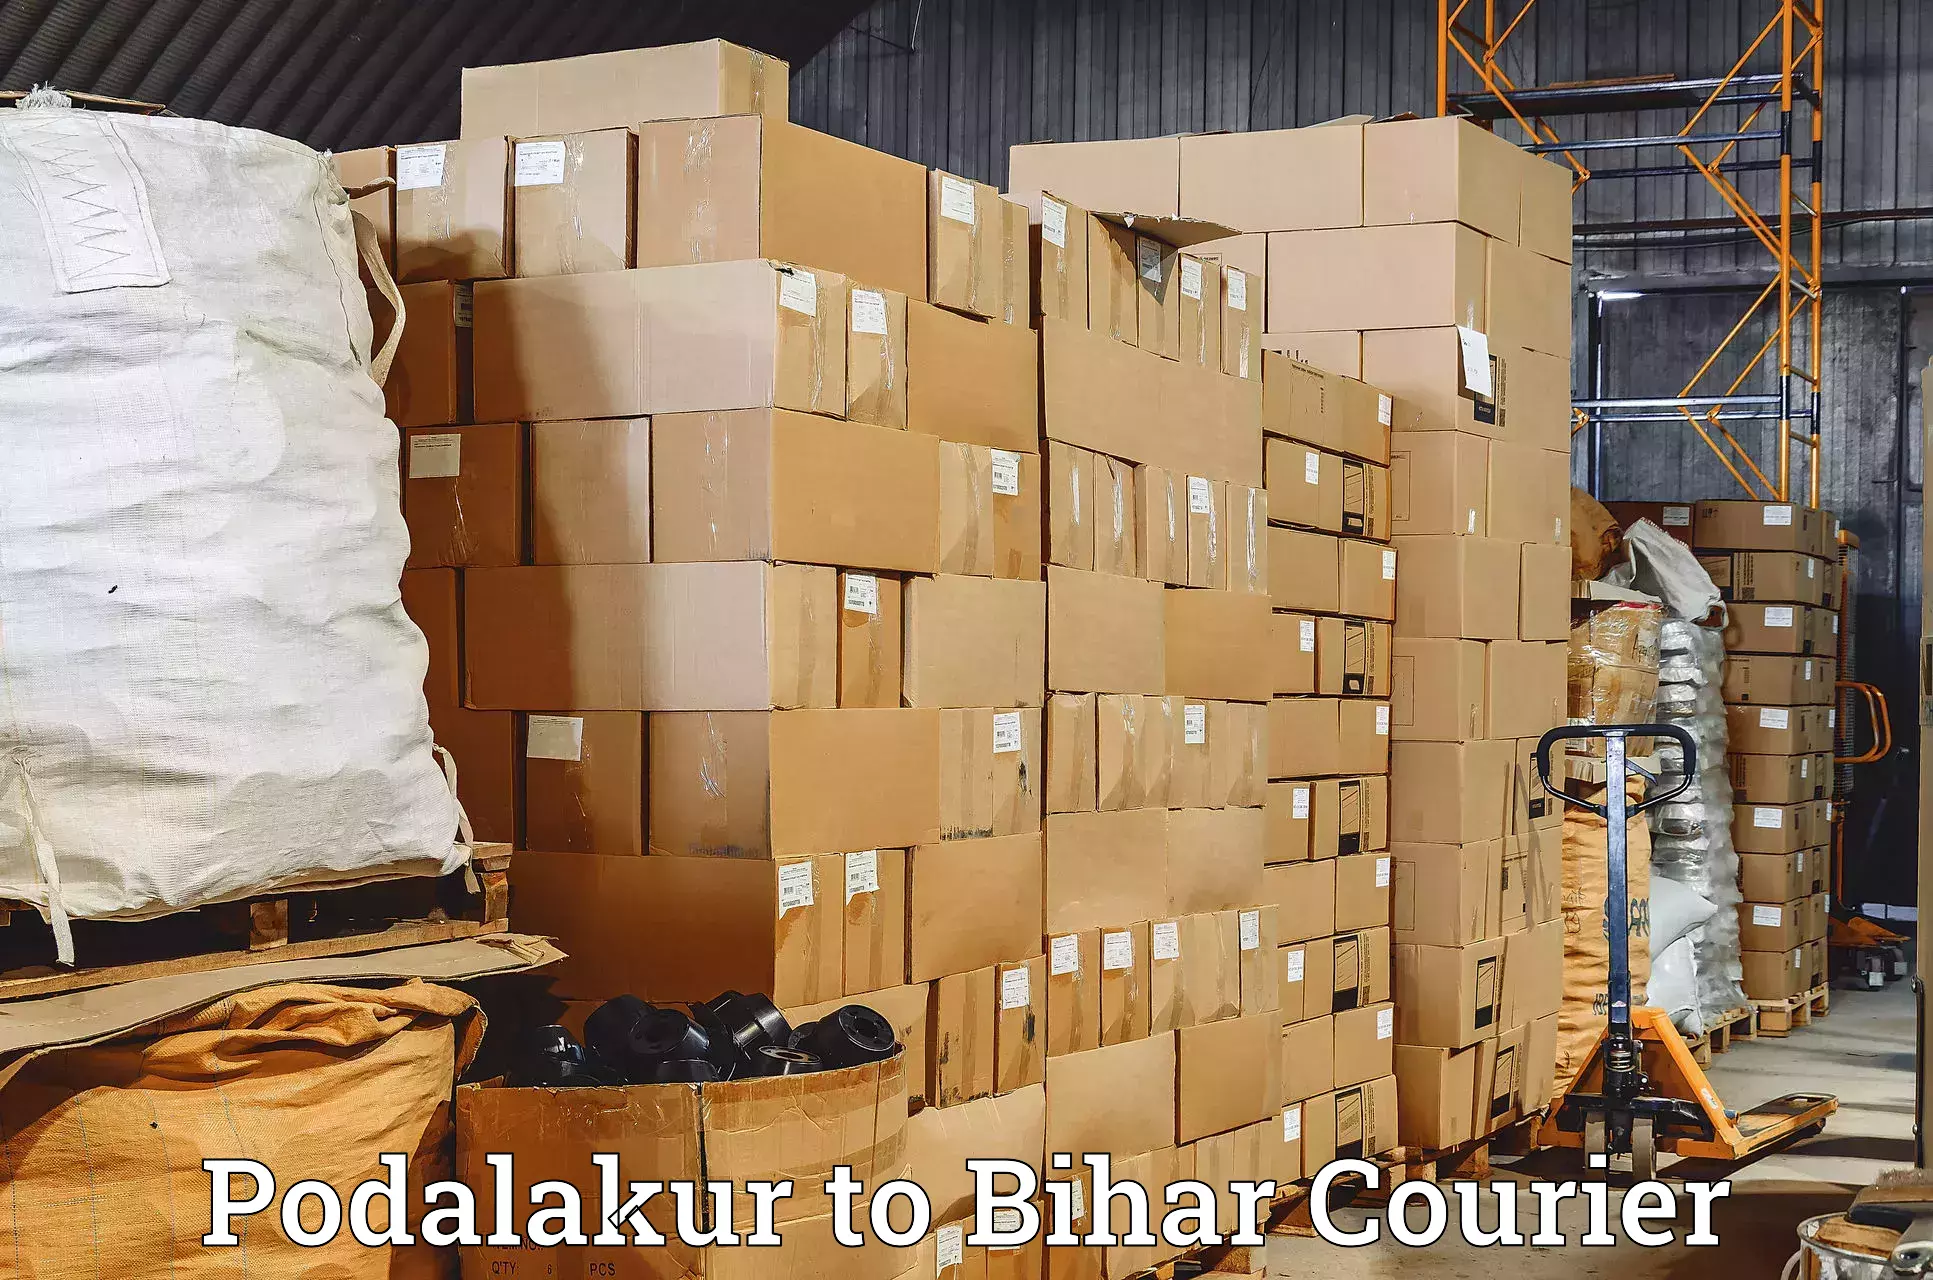 Courier service comparison Podalakur to Valmiki Nagar